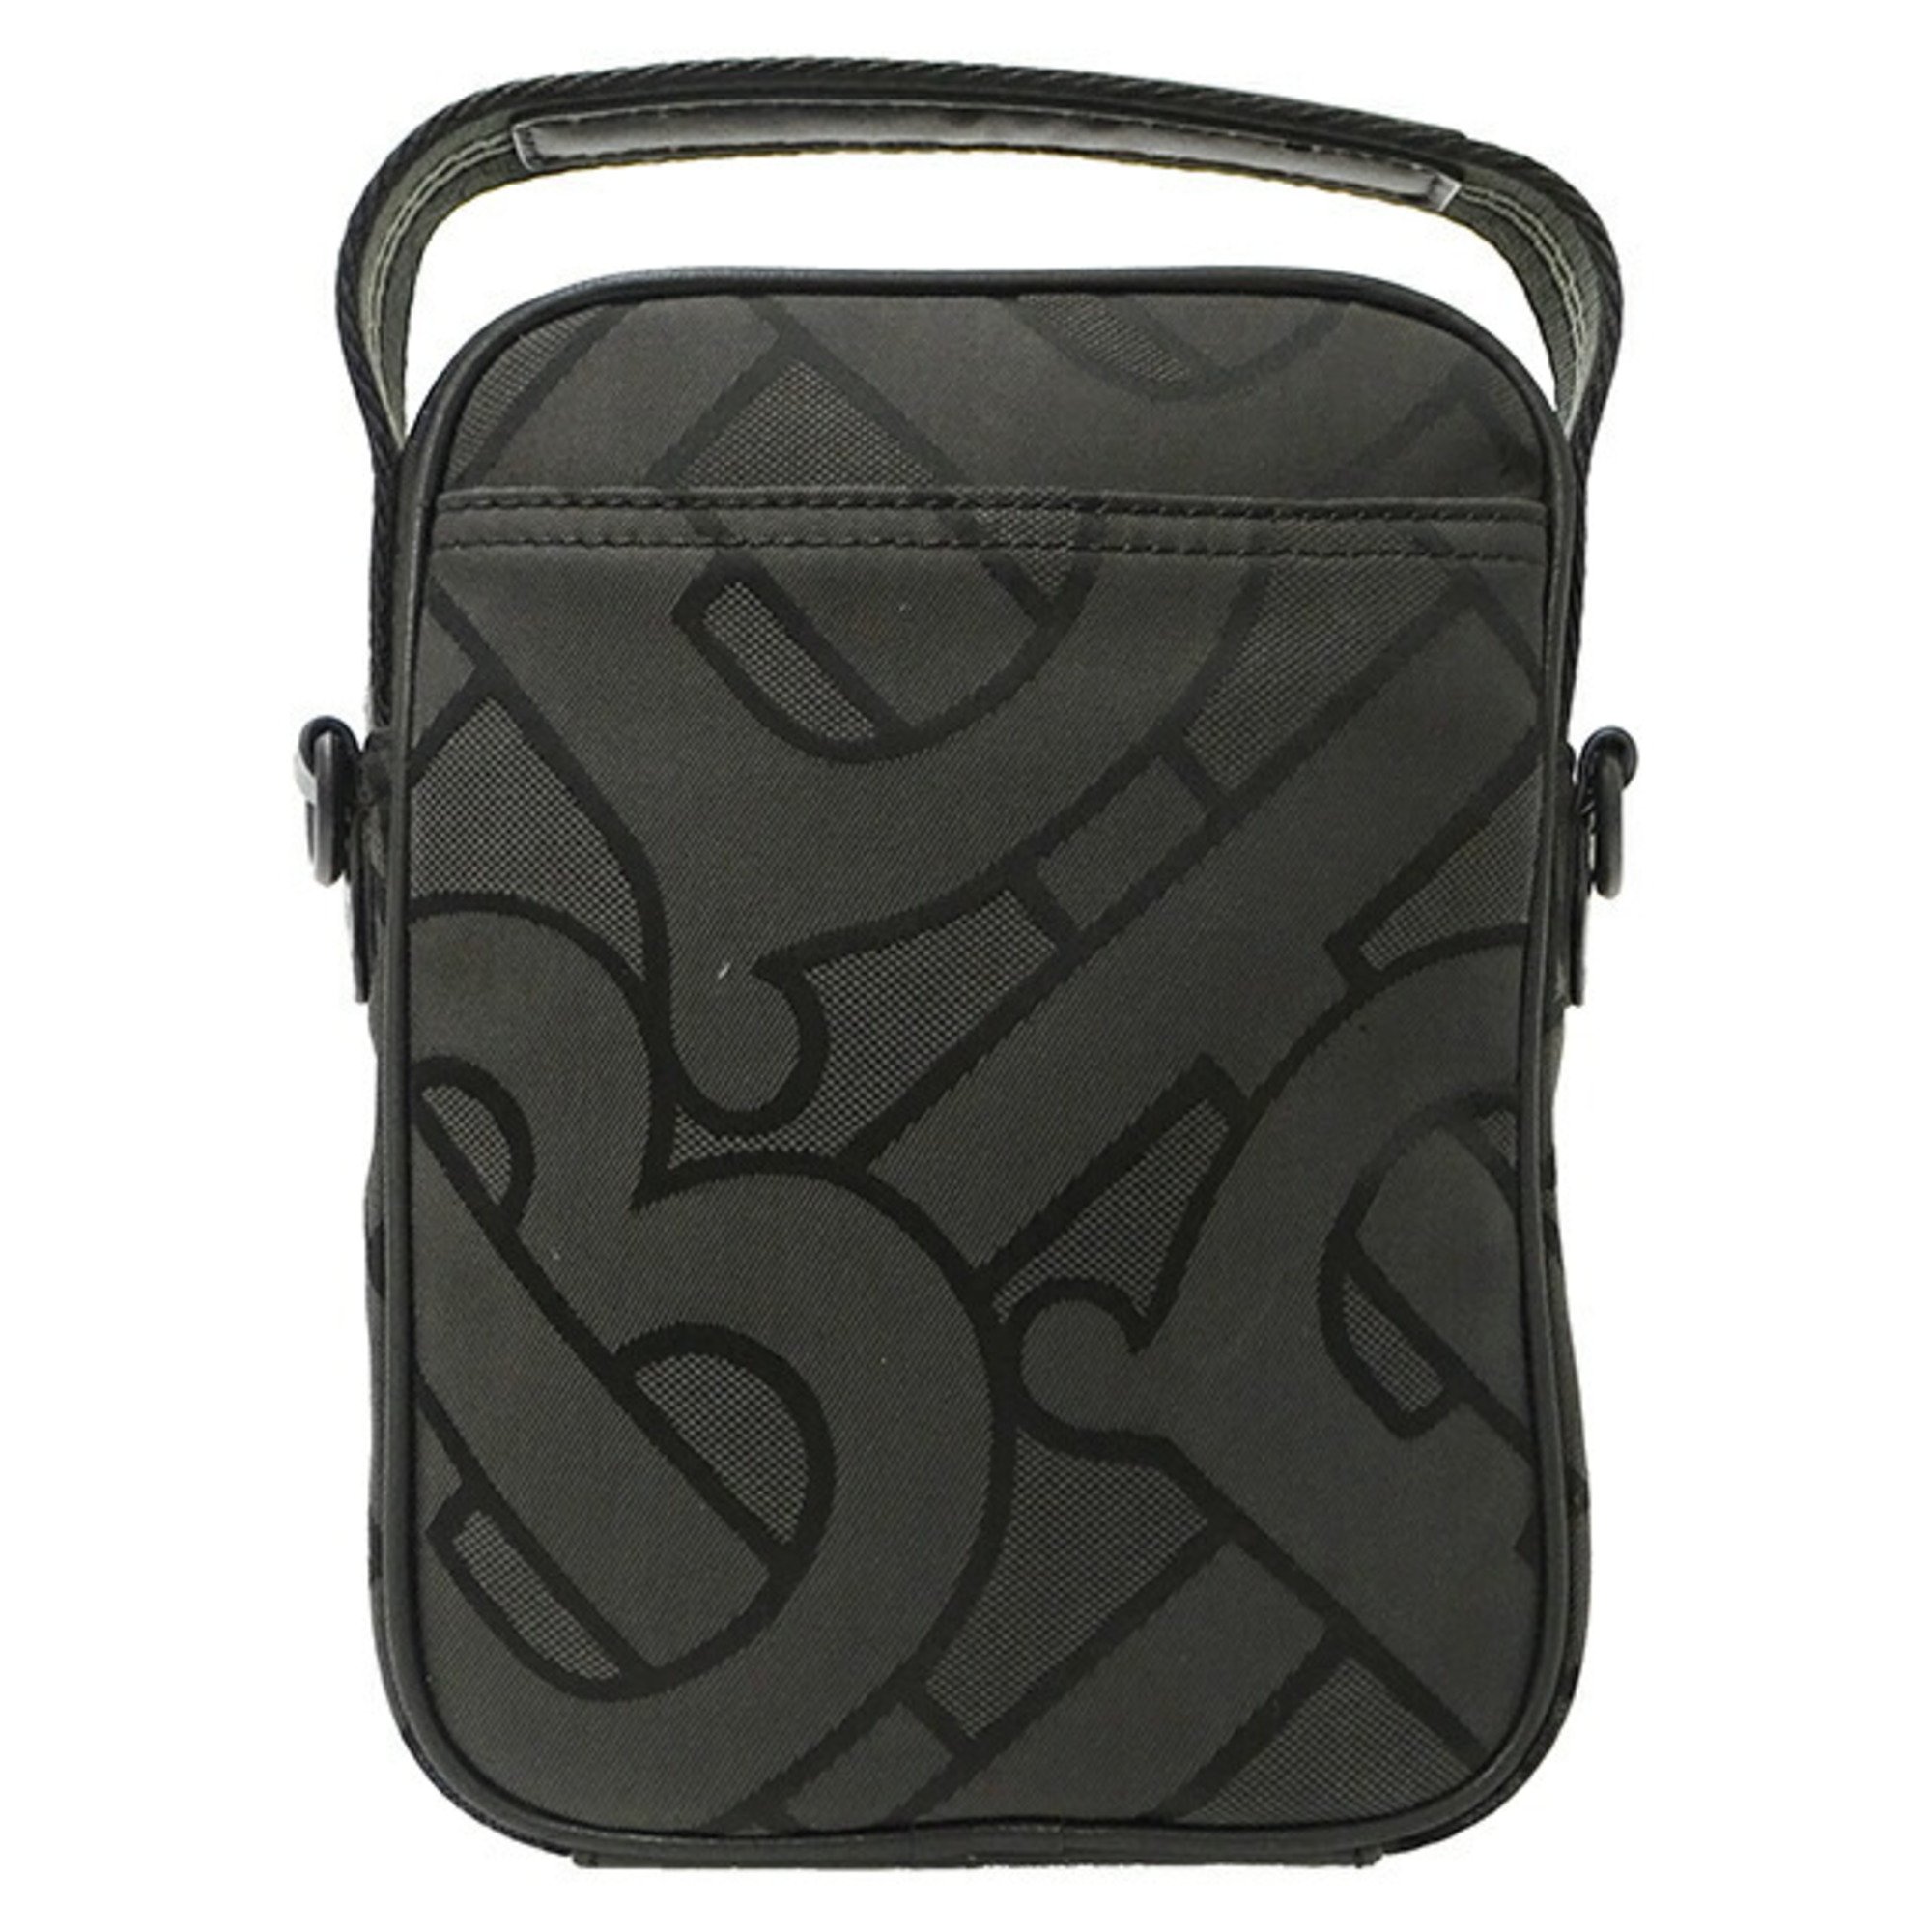 Burberry Bag Men's Handbag Shoulder 2way Canvas Black Grey Compact